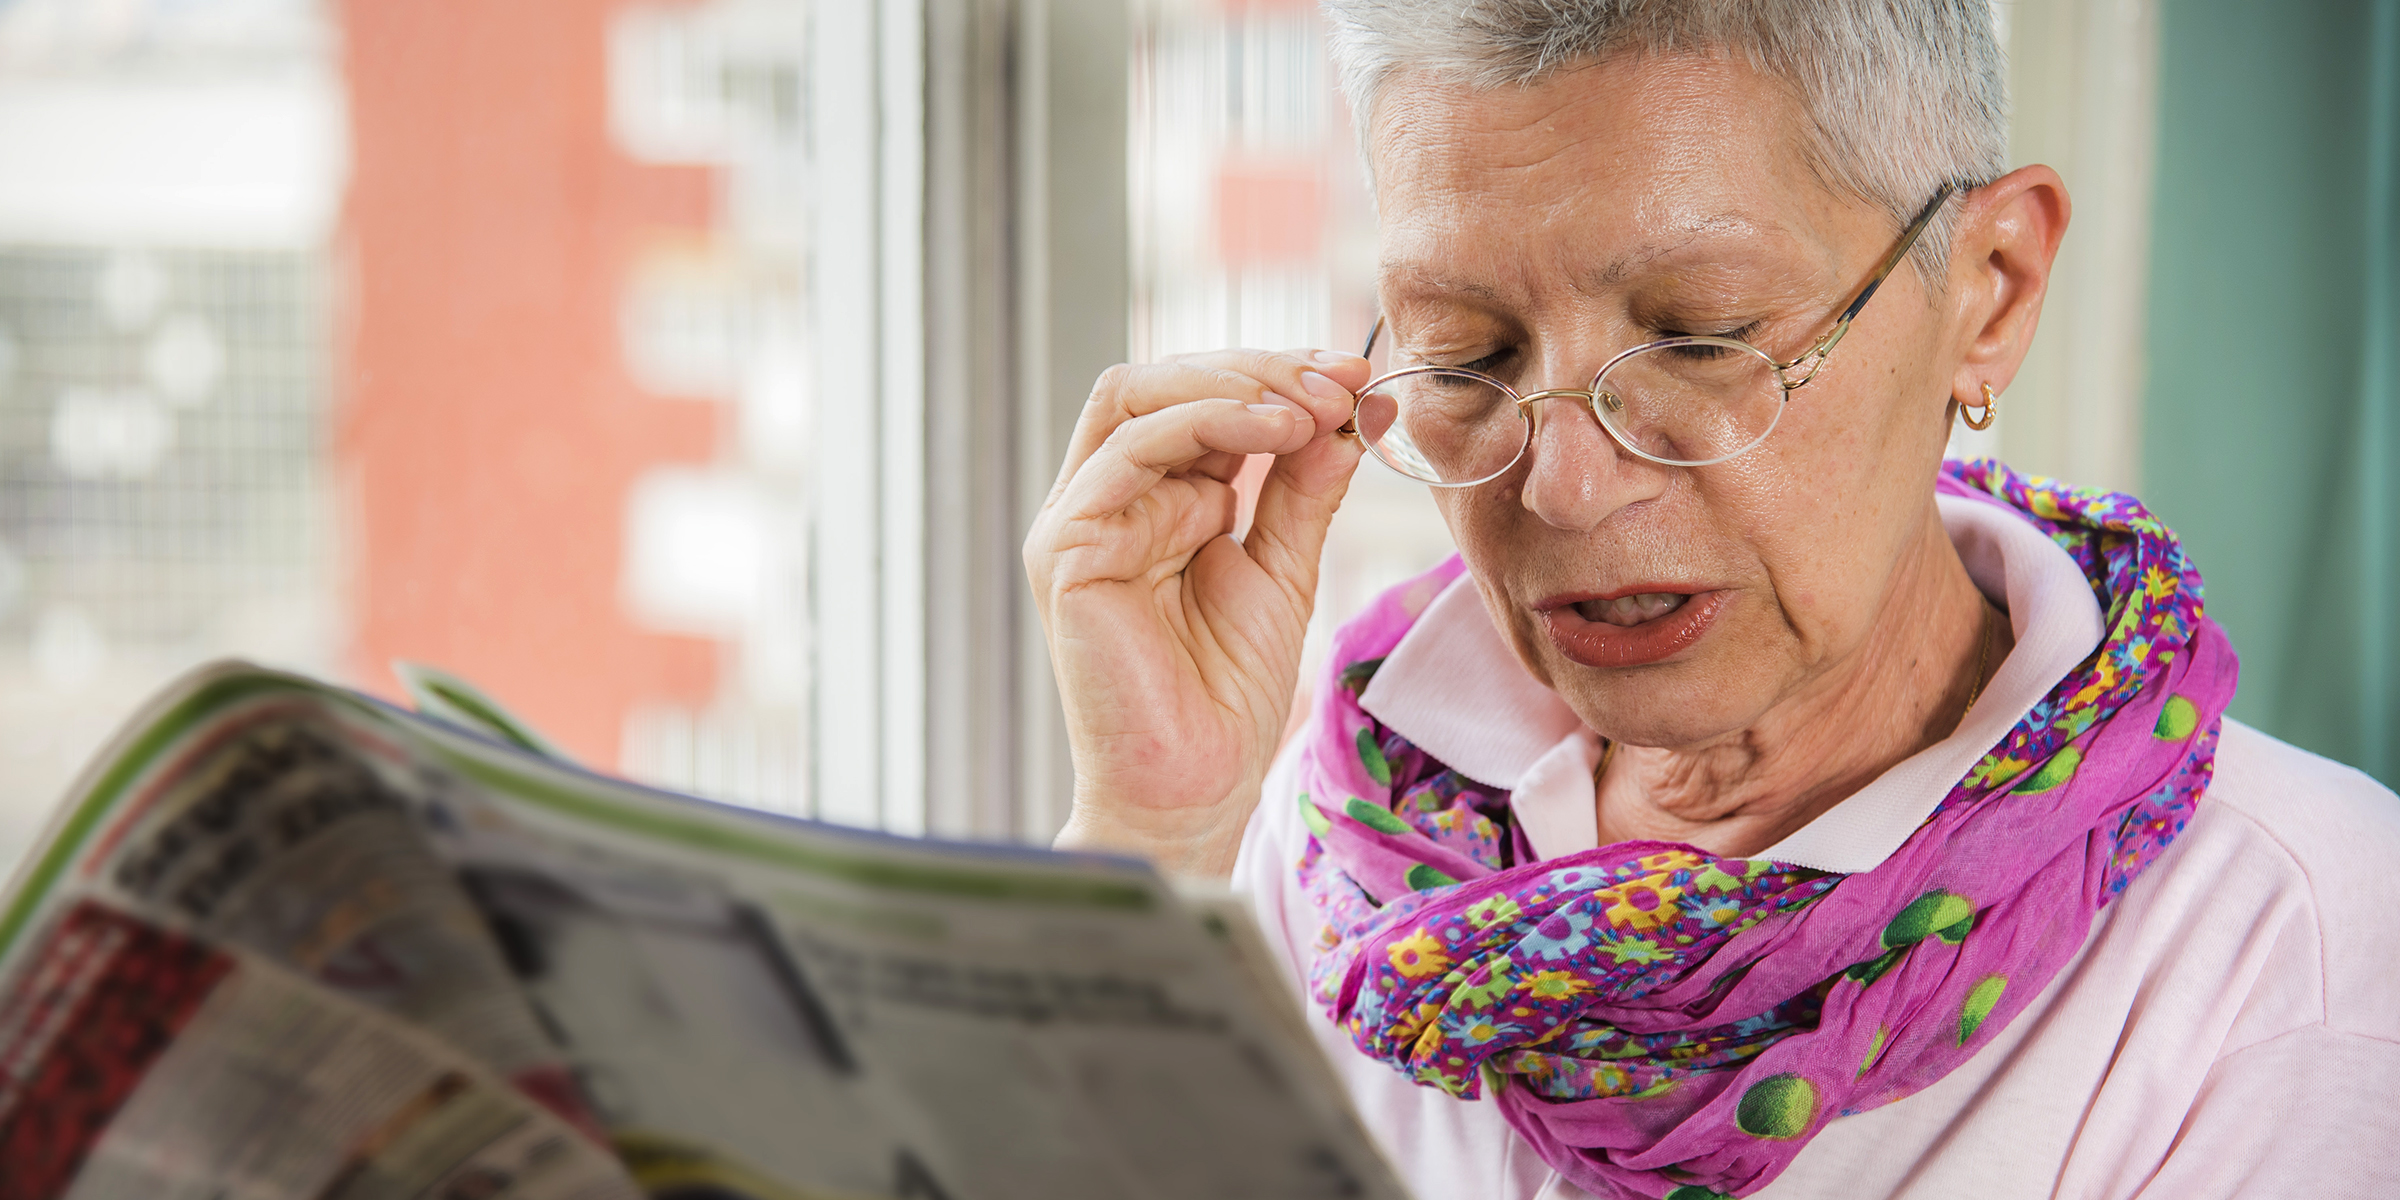 An elderly woman with a magazine | Source: Shutterstock